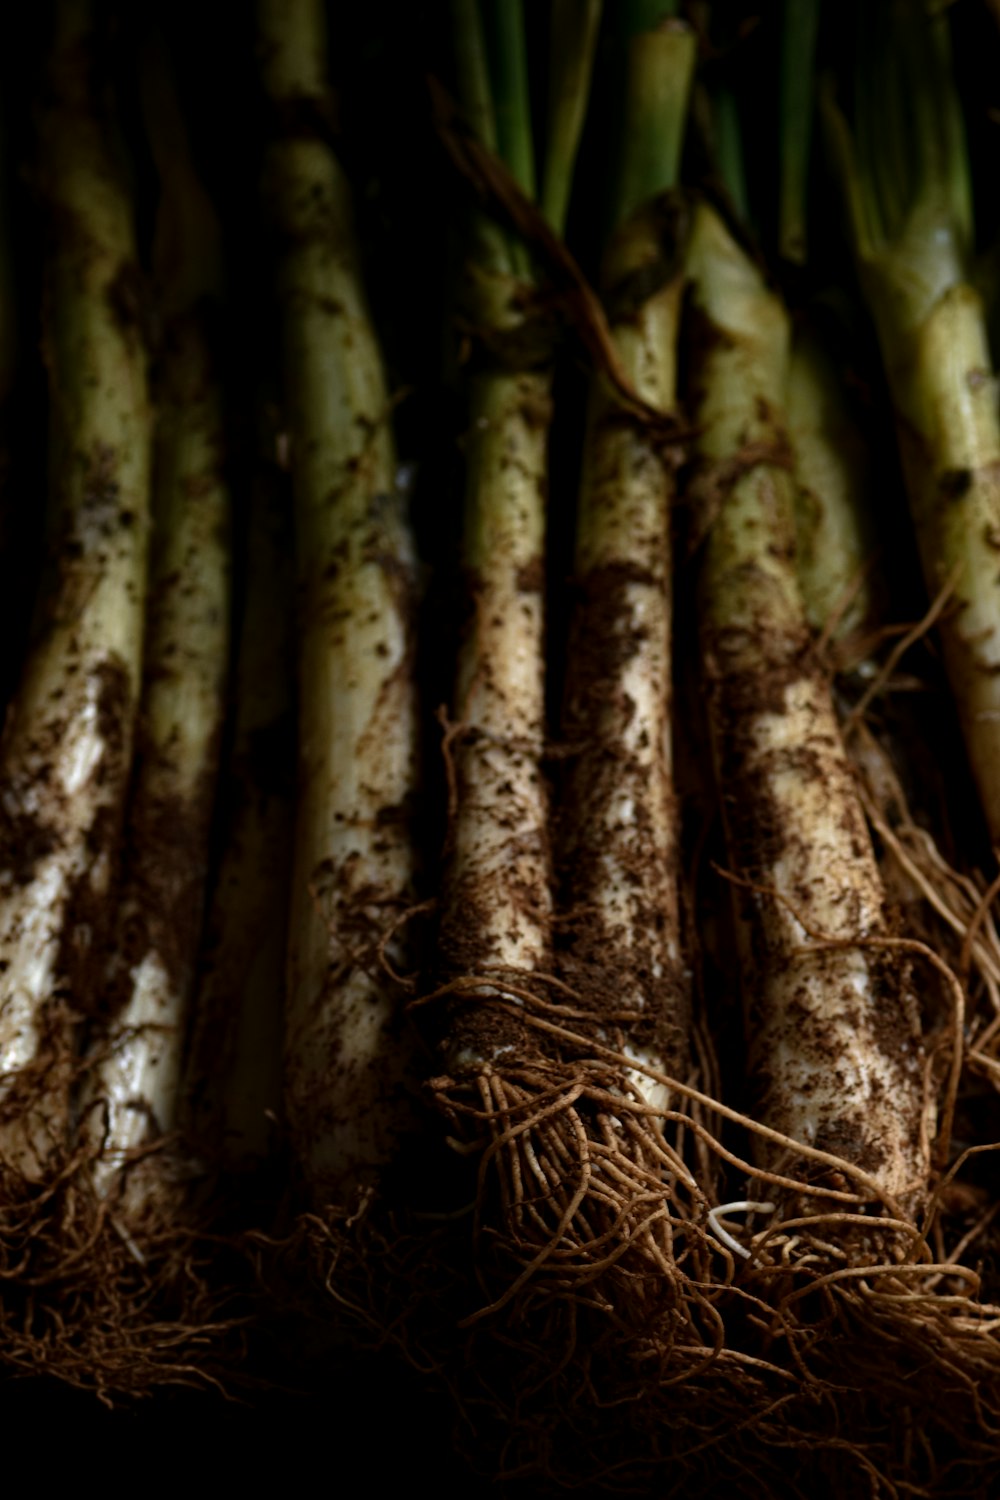 bastoncini di bambù marroni e verdi